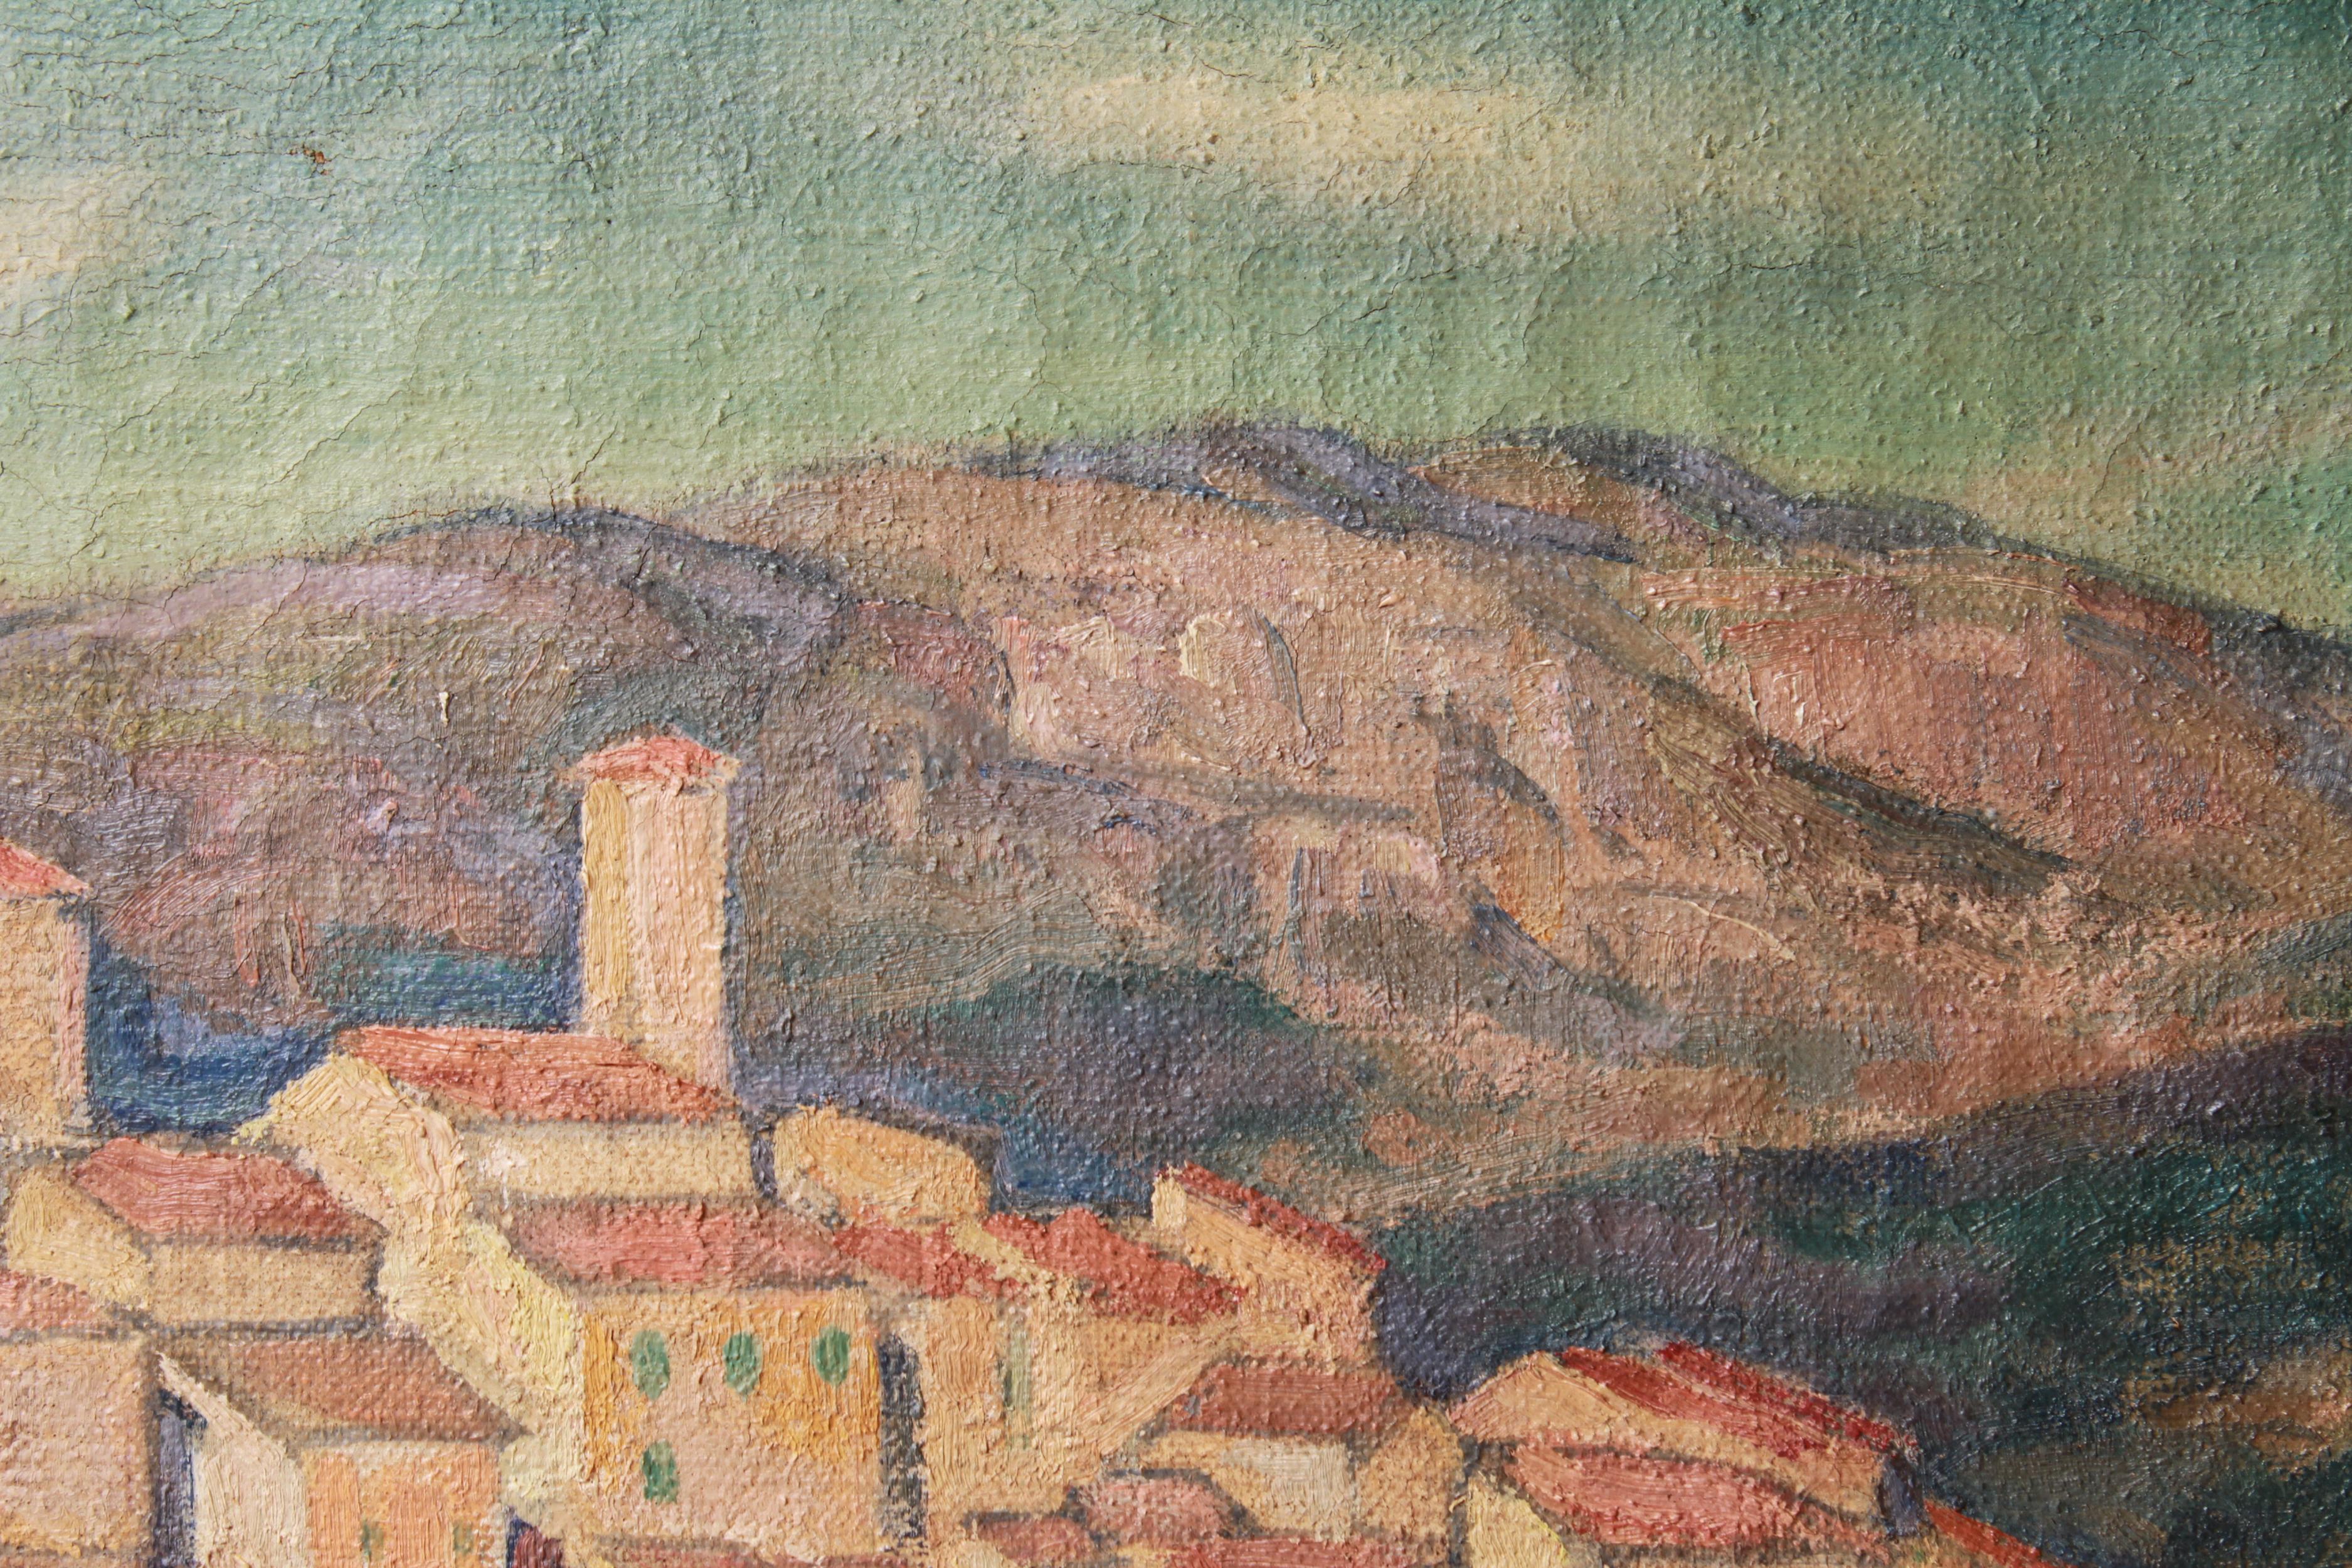 Hand-Painted George Macrum 'Gattières' French Oil Landscape Painting